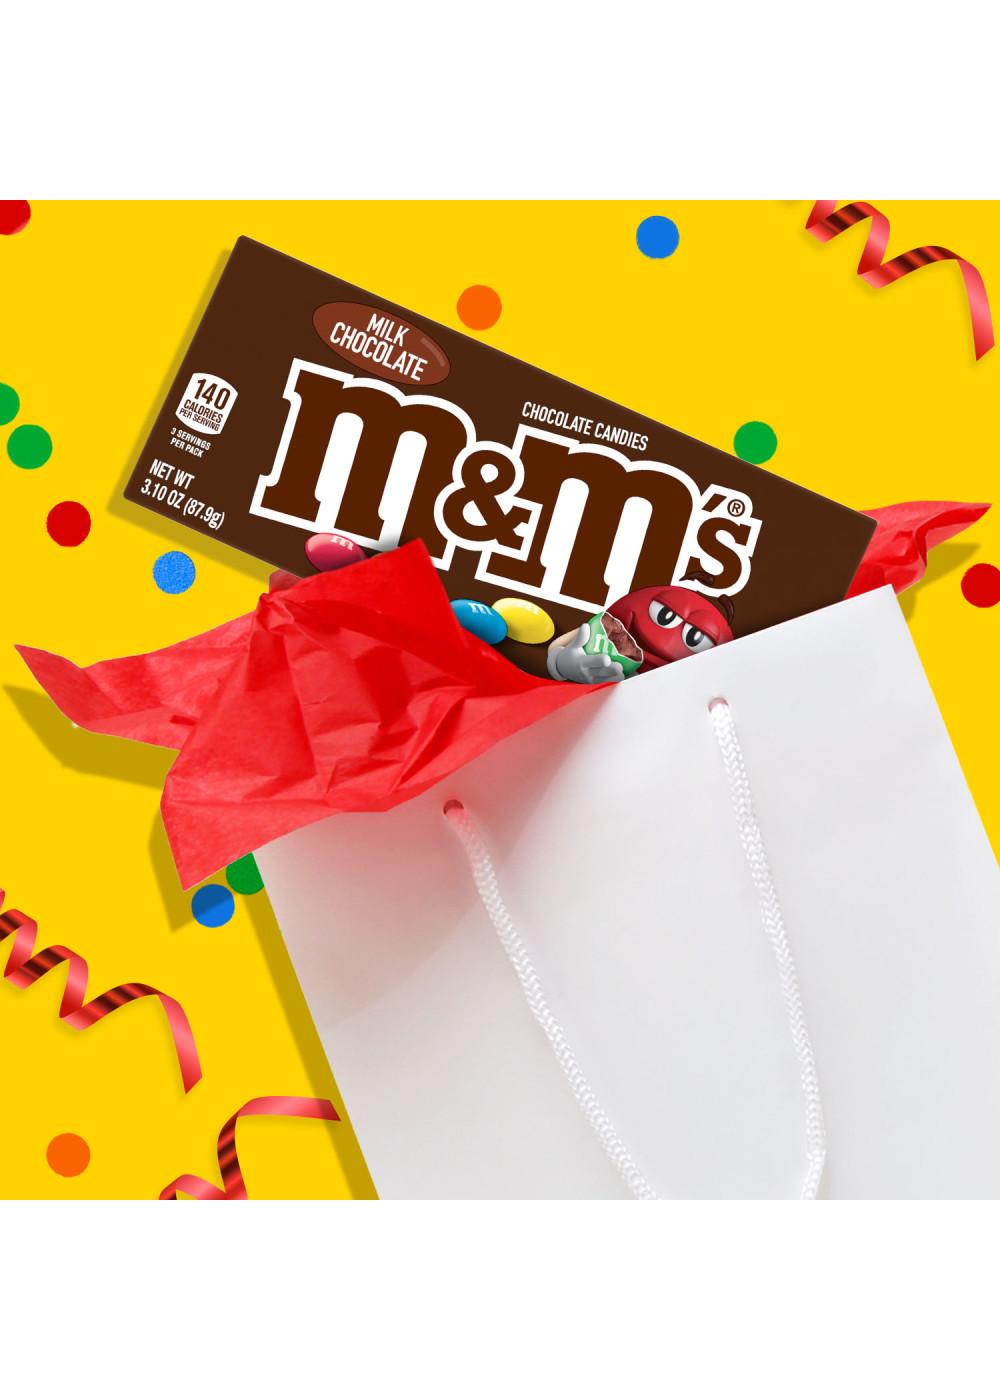 M&M'S Milk Chocolate Candy Theater Box